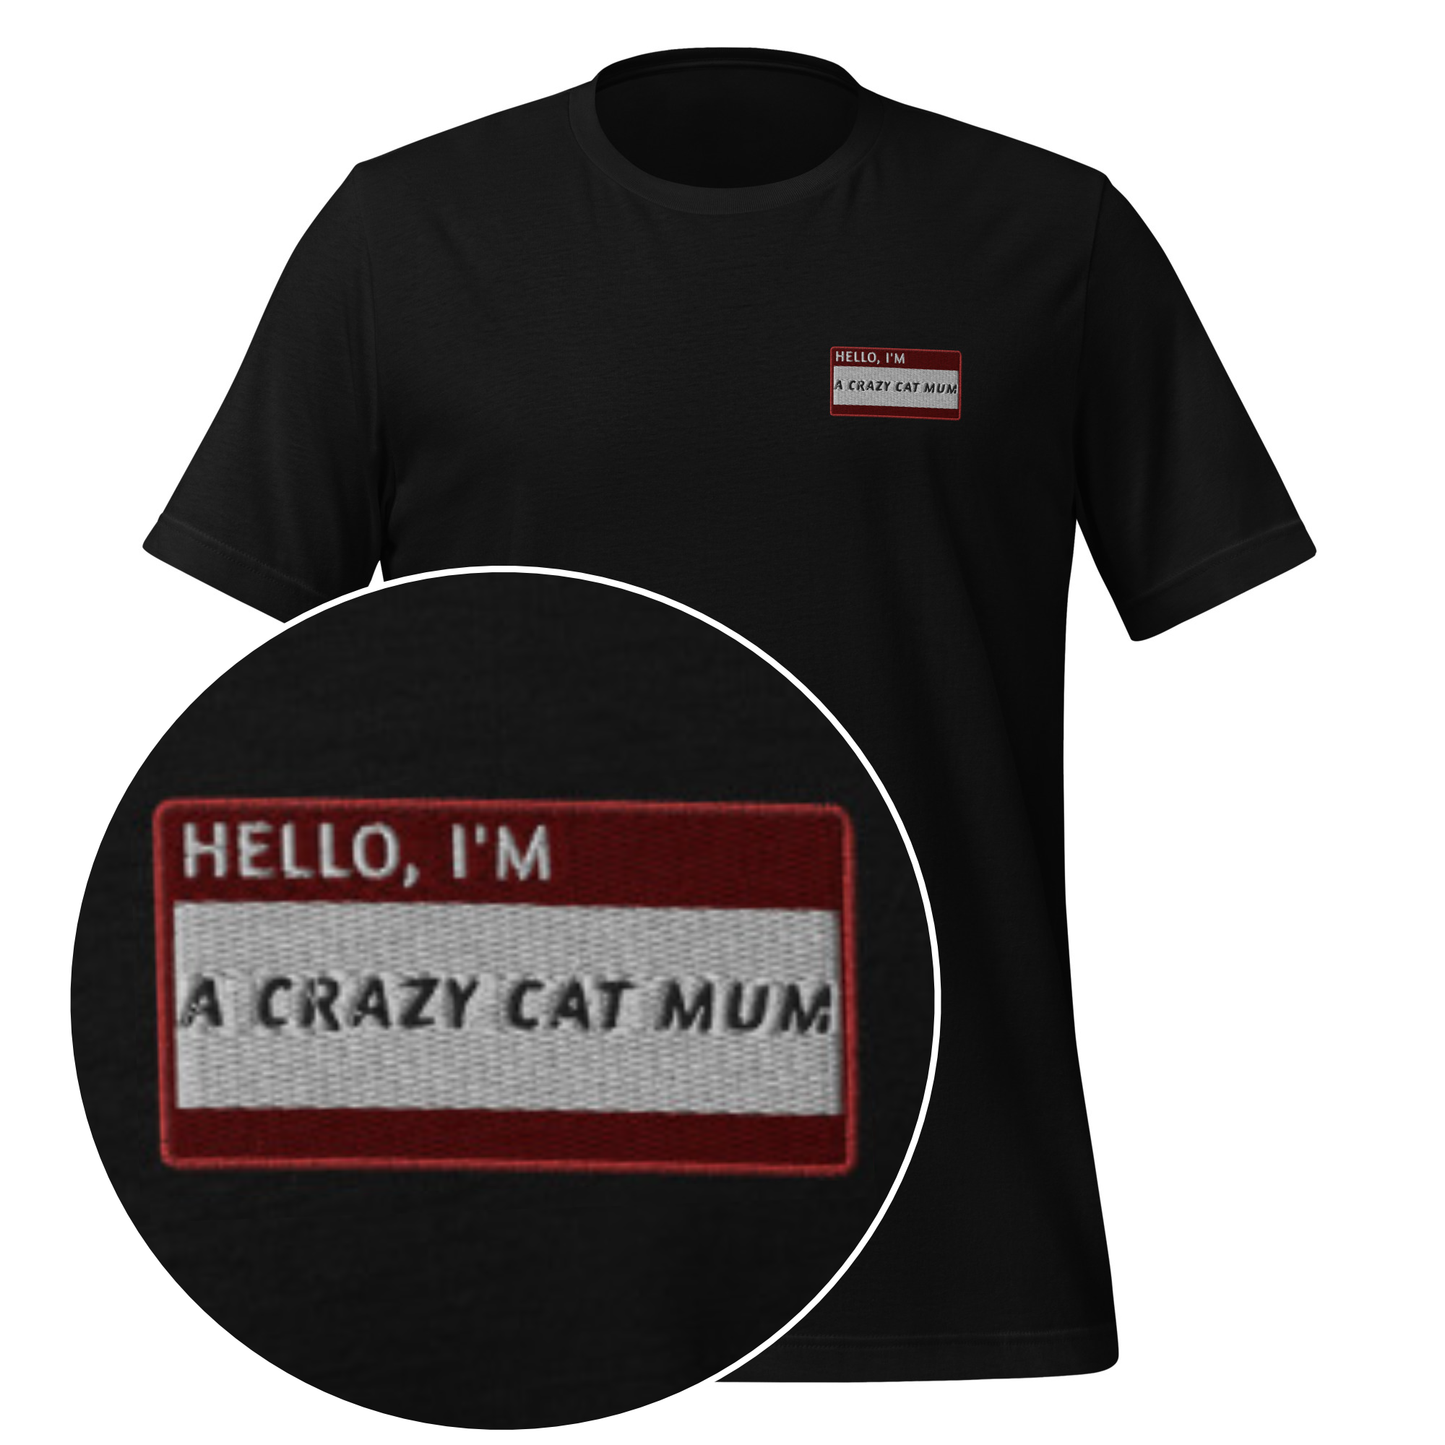 HELLO I'M A CRAZY CAT MUM - Name Tag T-Shirt